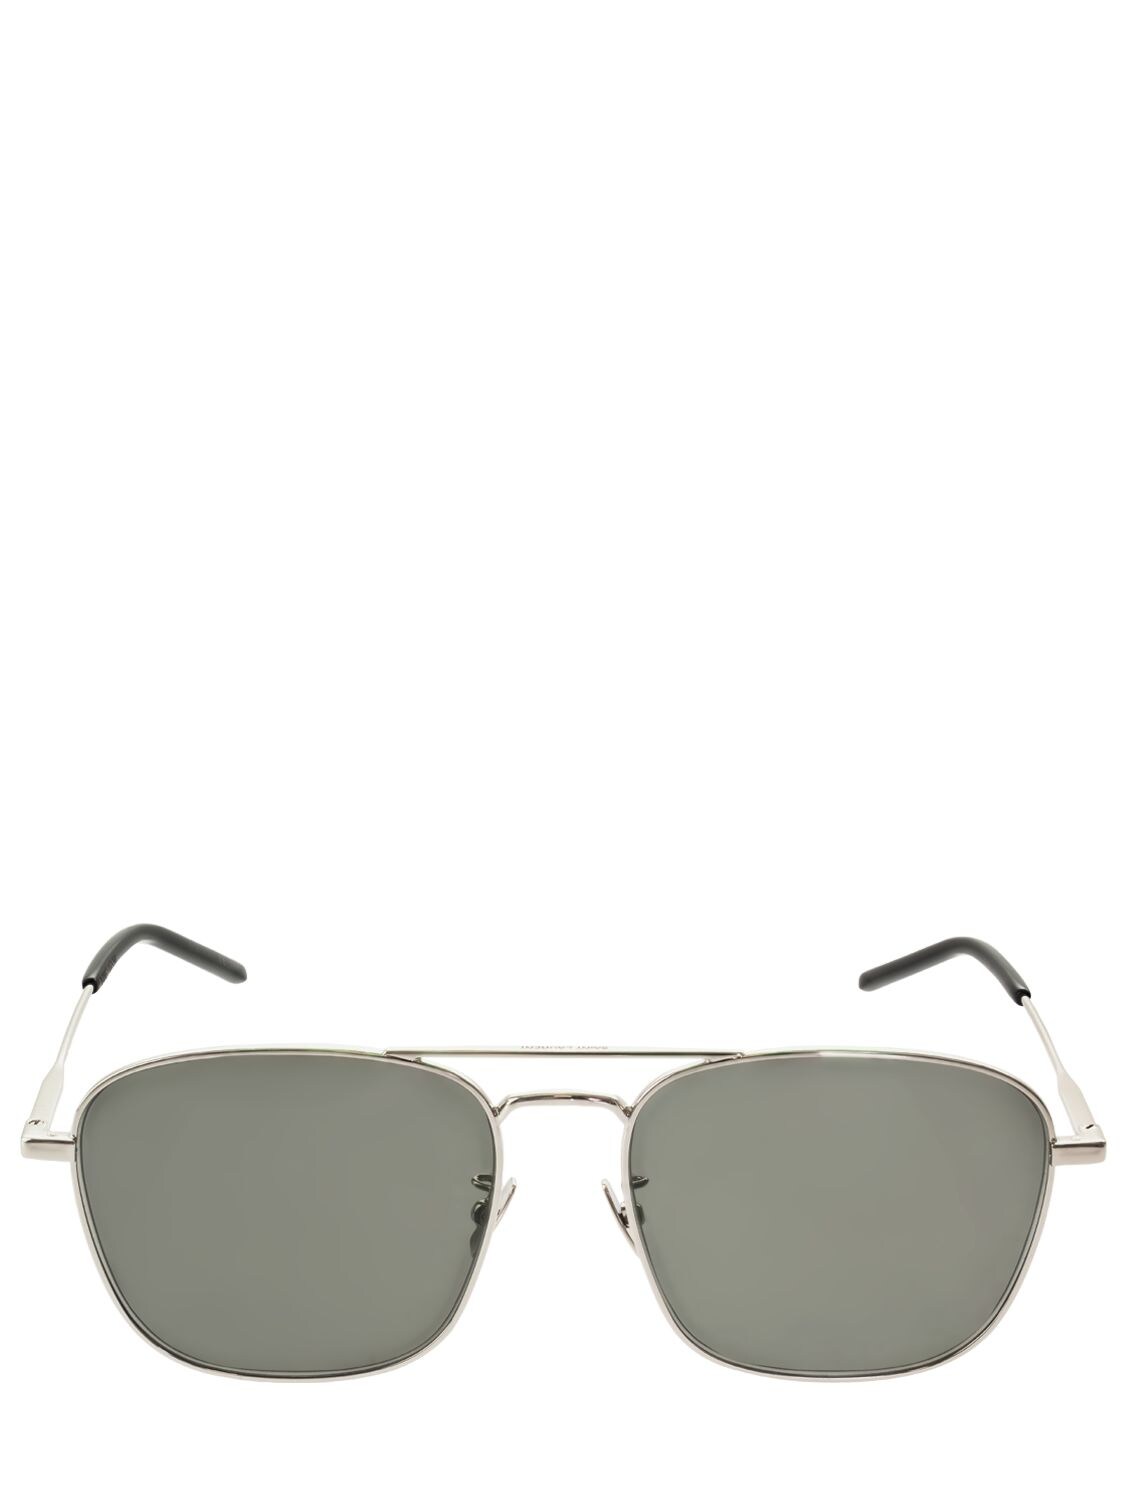 Ysl Sl 309 Large Sunglasses